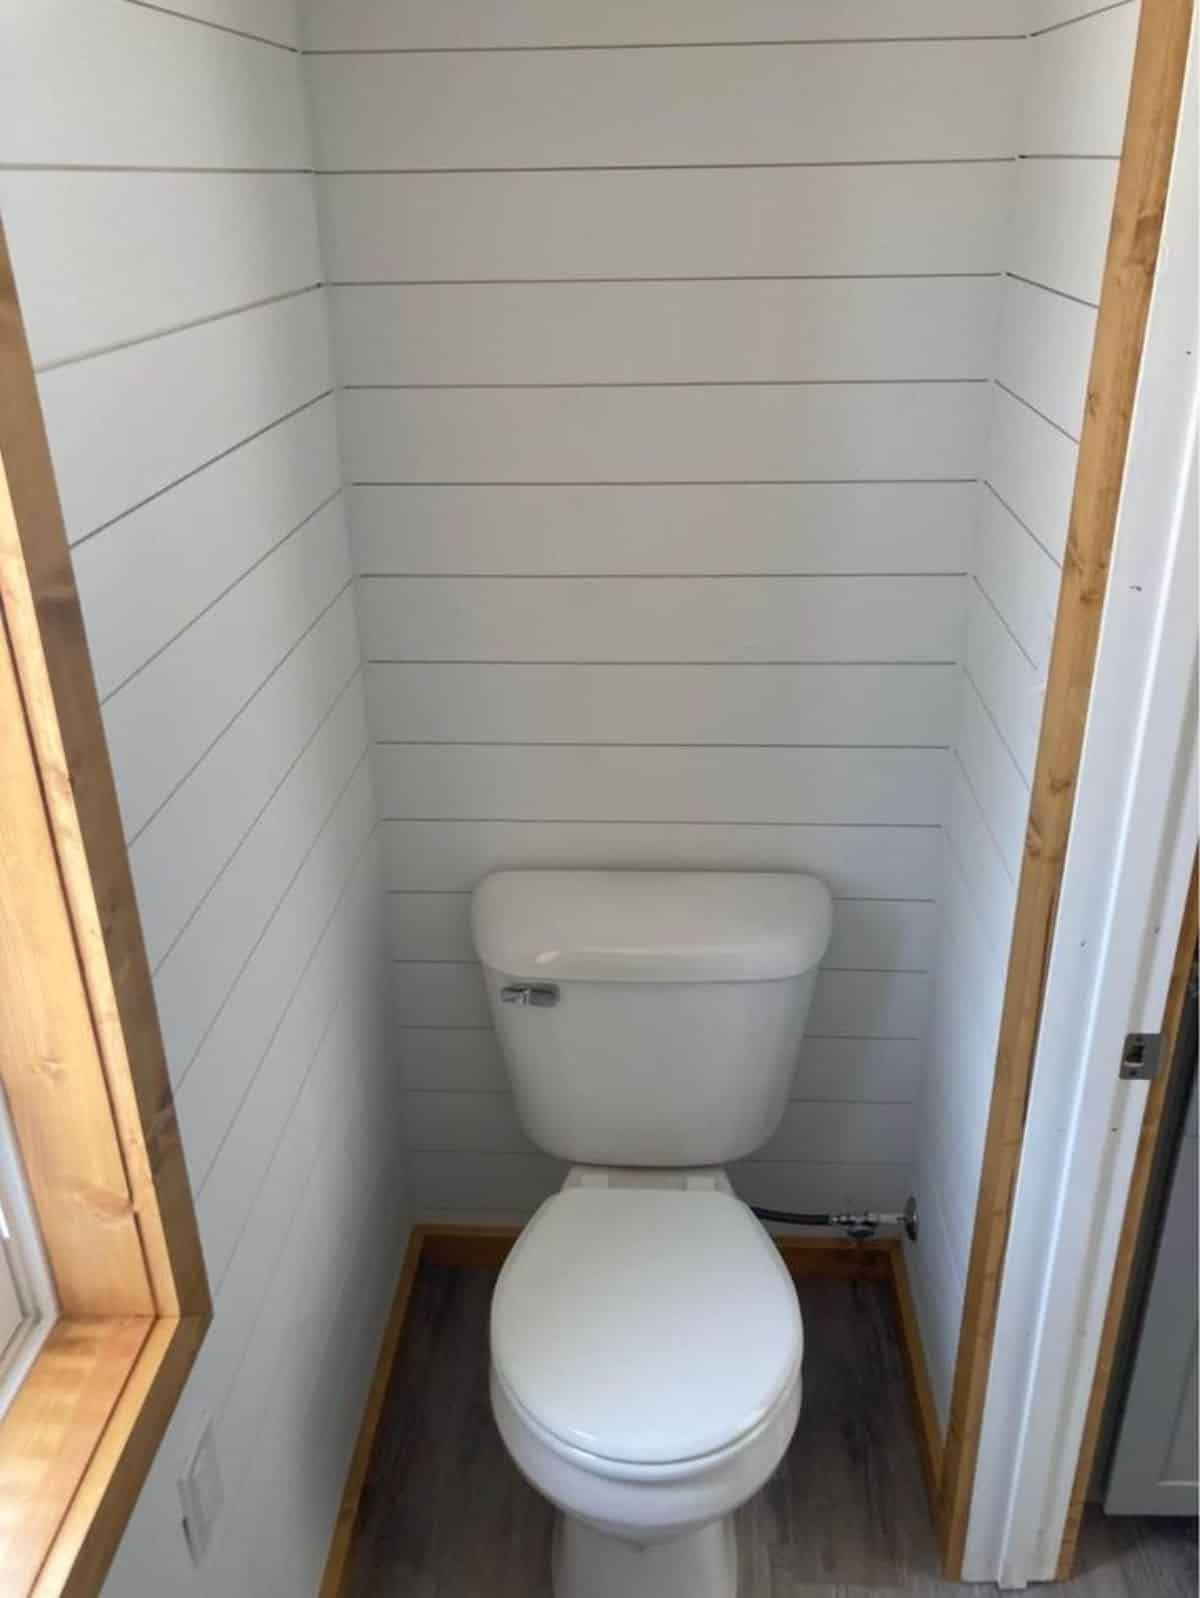 Standard toilet in bathroom of durable house on wheels